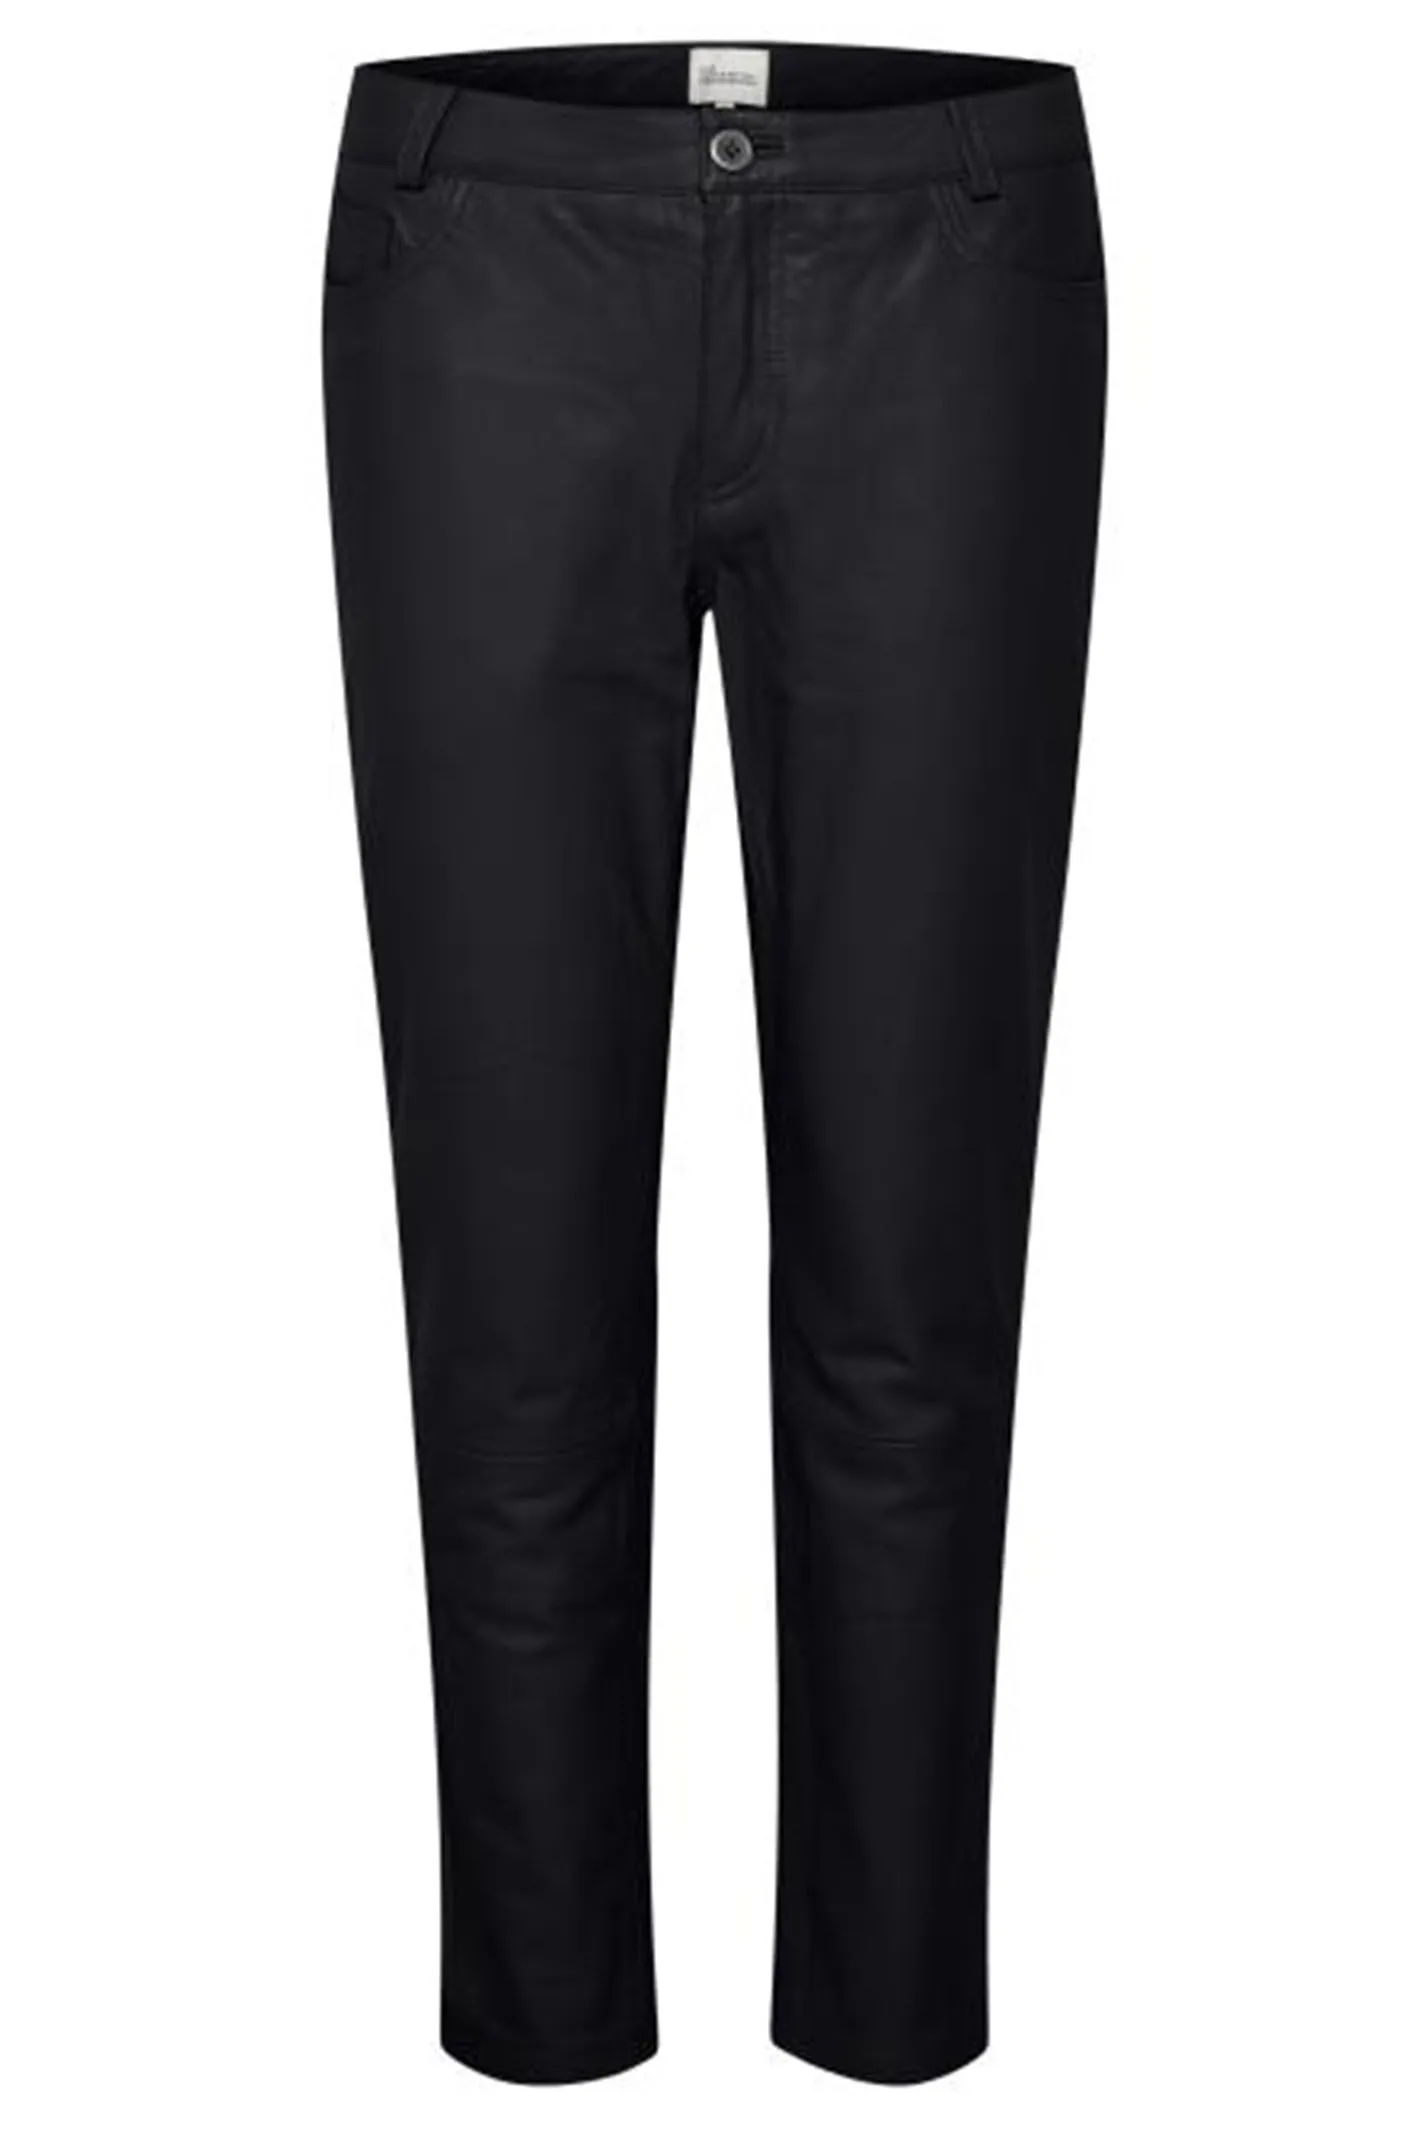 Essential Wardrobe 24 The Pant Bukser Black